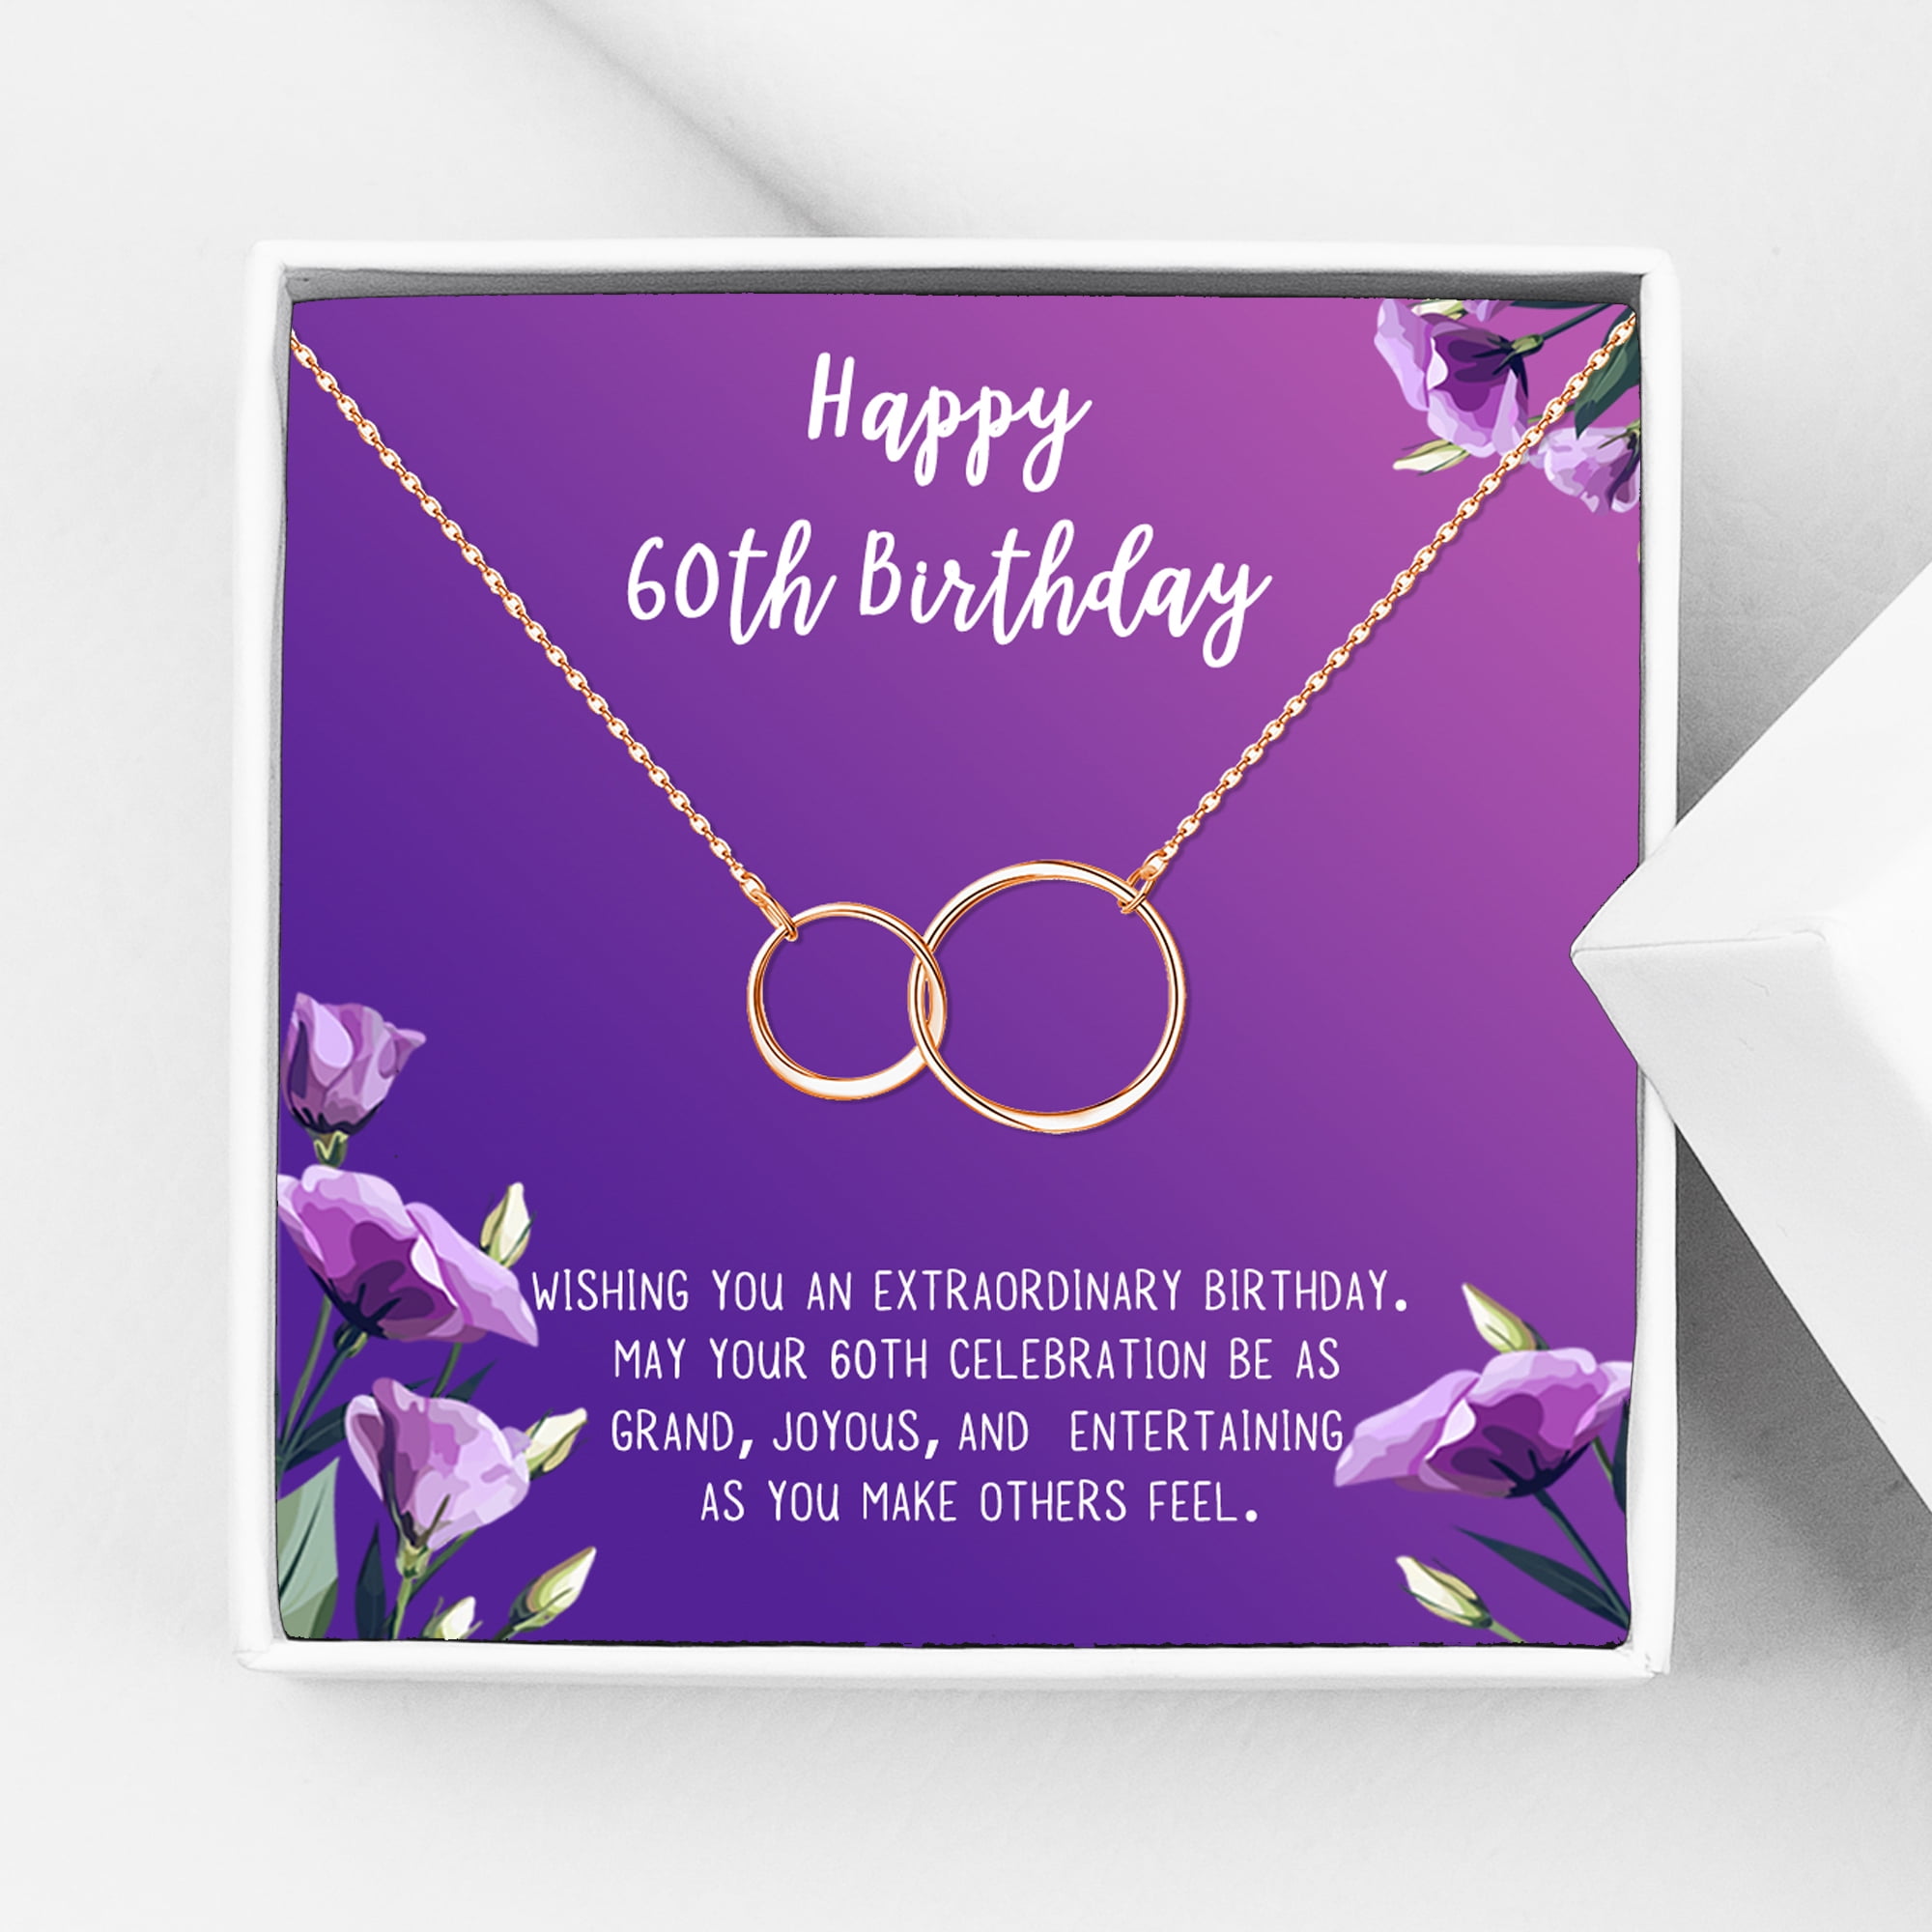 Happy 60th Birthday Alluring Necklace 60th Necklace birthday gifts for Mom,Gifts Jewelry 60th Birthday Gift Birthday Gift Ideas for Women